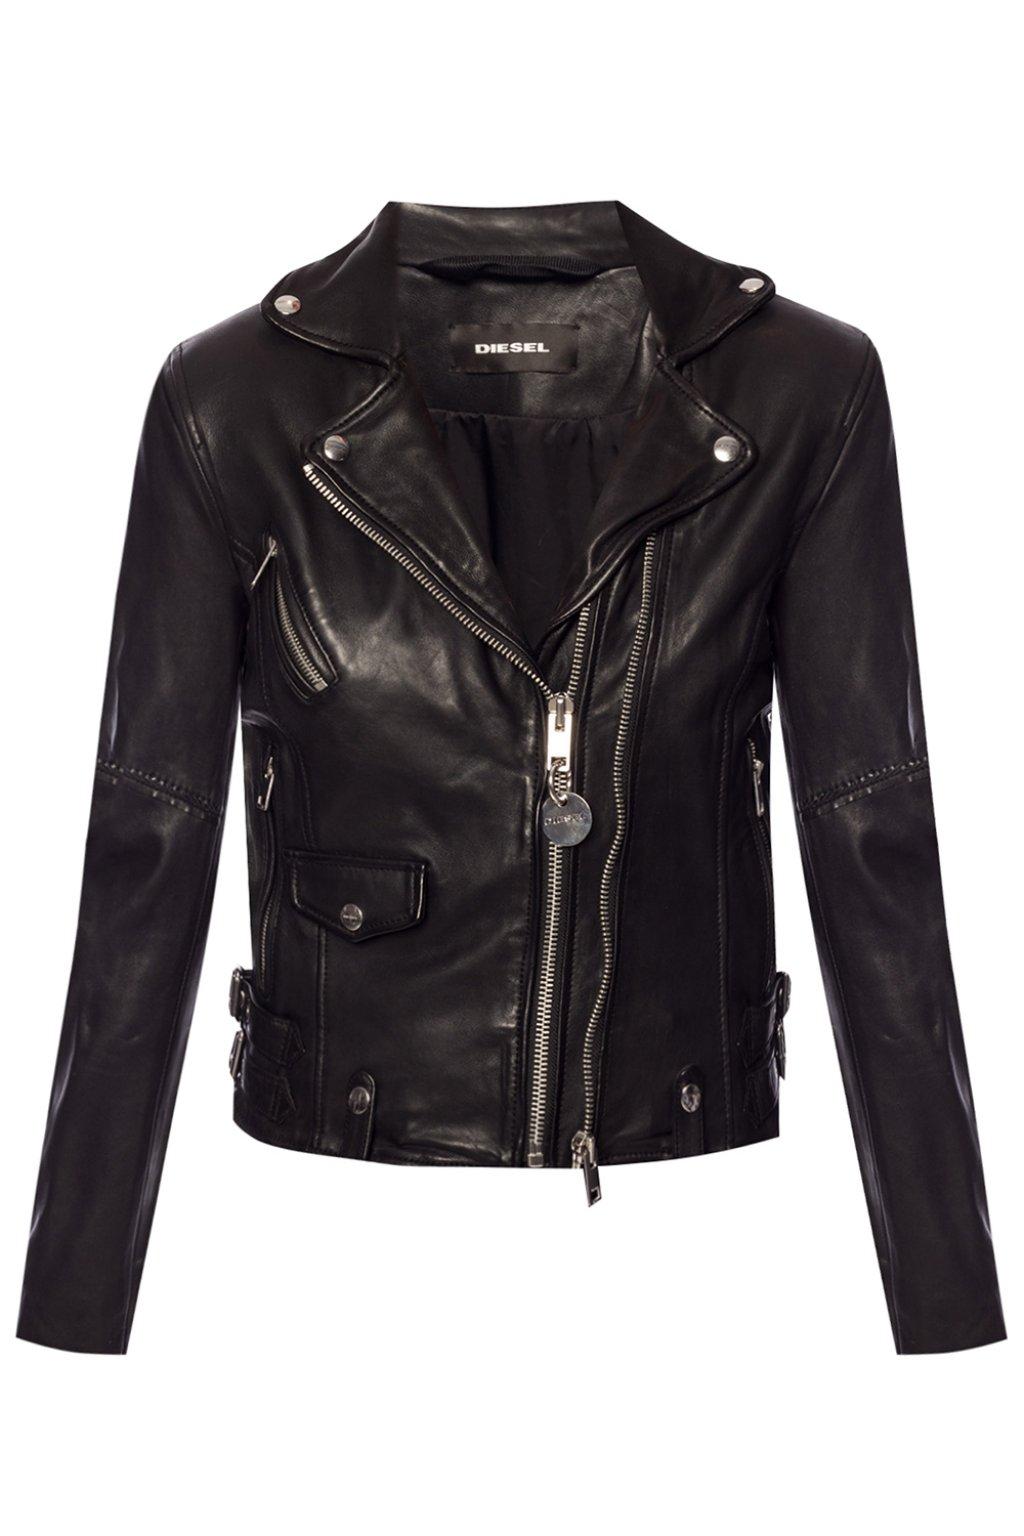 DIESEL Leather Biker Jacket in Black - Save 8% - Lyst